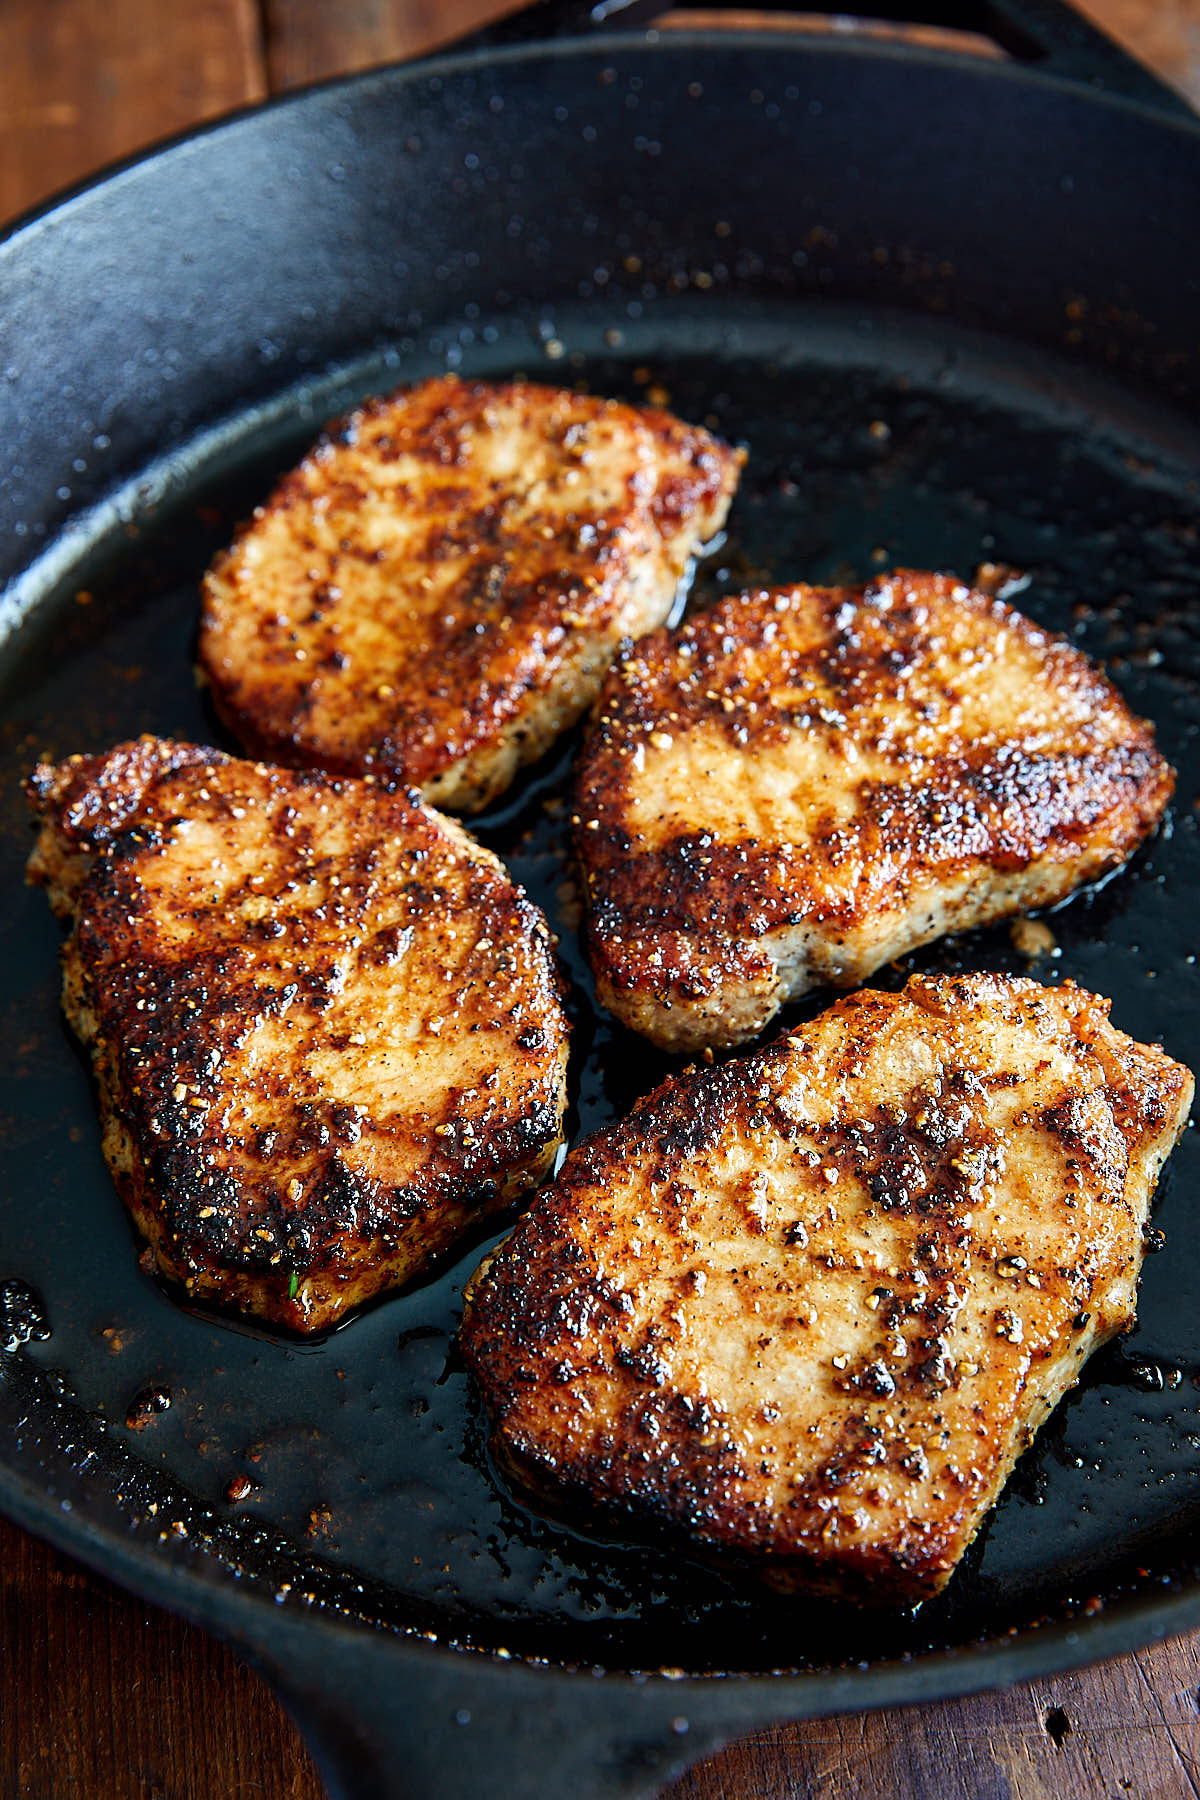 10-minute pan-fried boneless pork chops